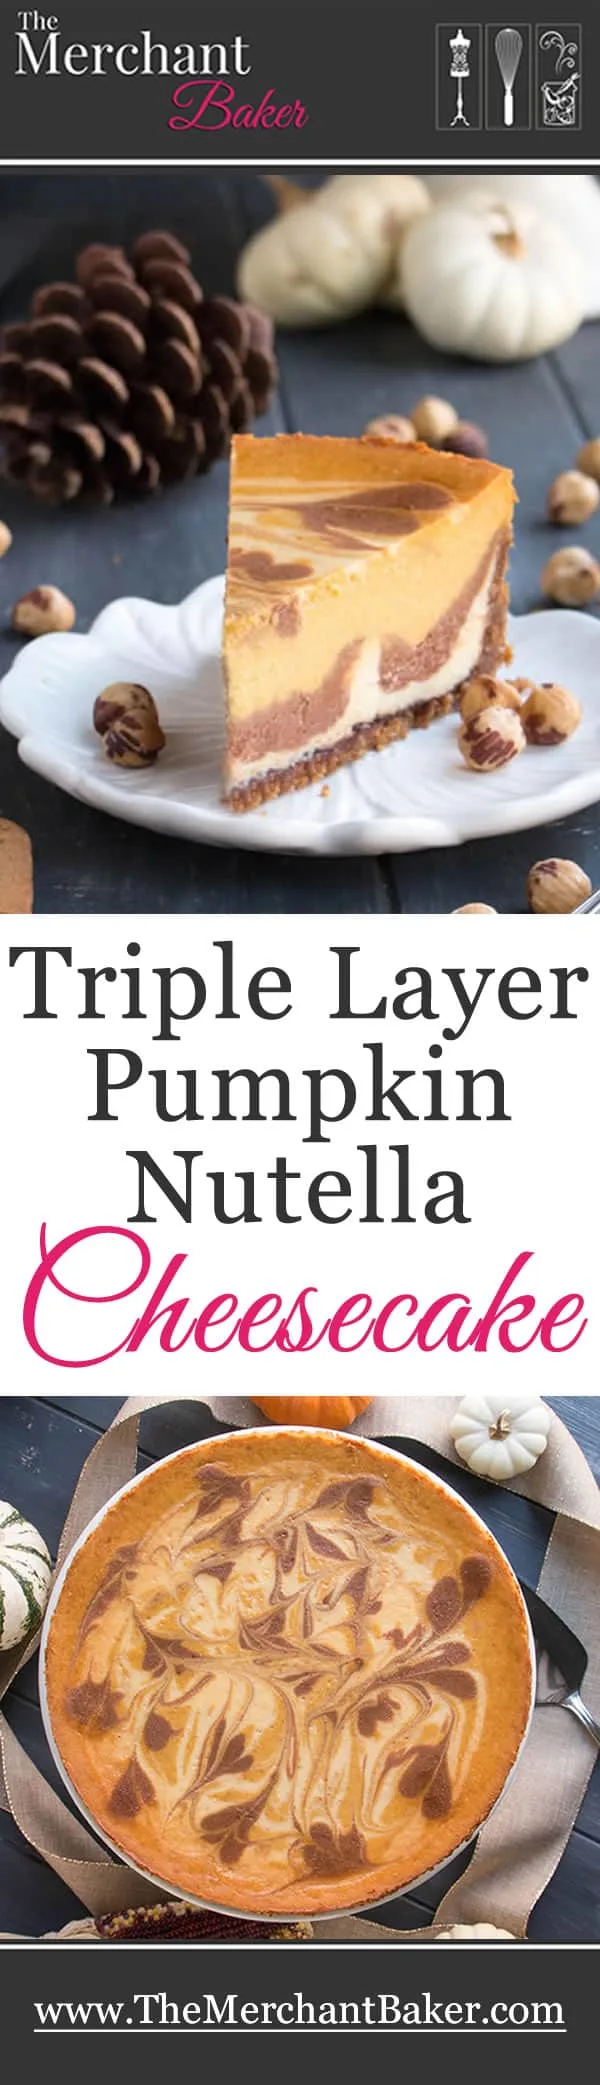 Triple Layer Pumpkin Nutella Cheesecake